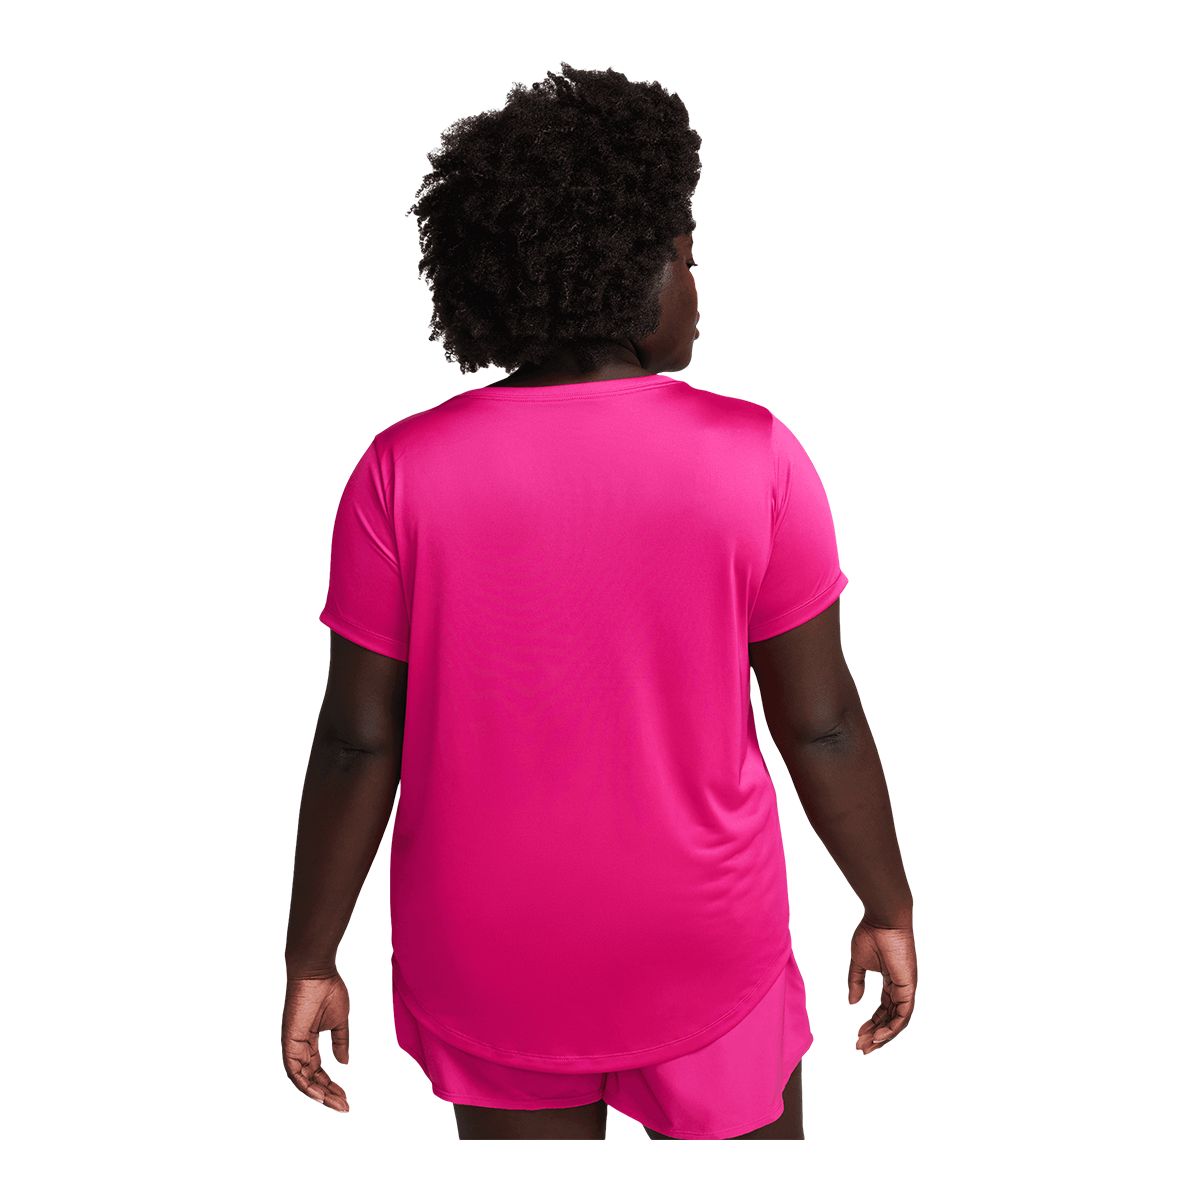 Nike, Dri-FIT Legend Women's Training T-Shirt, Black